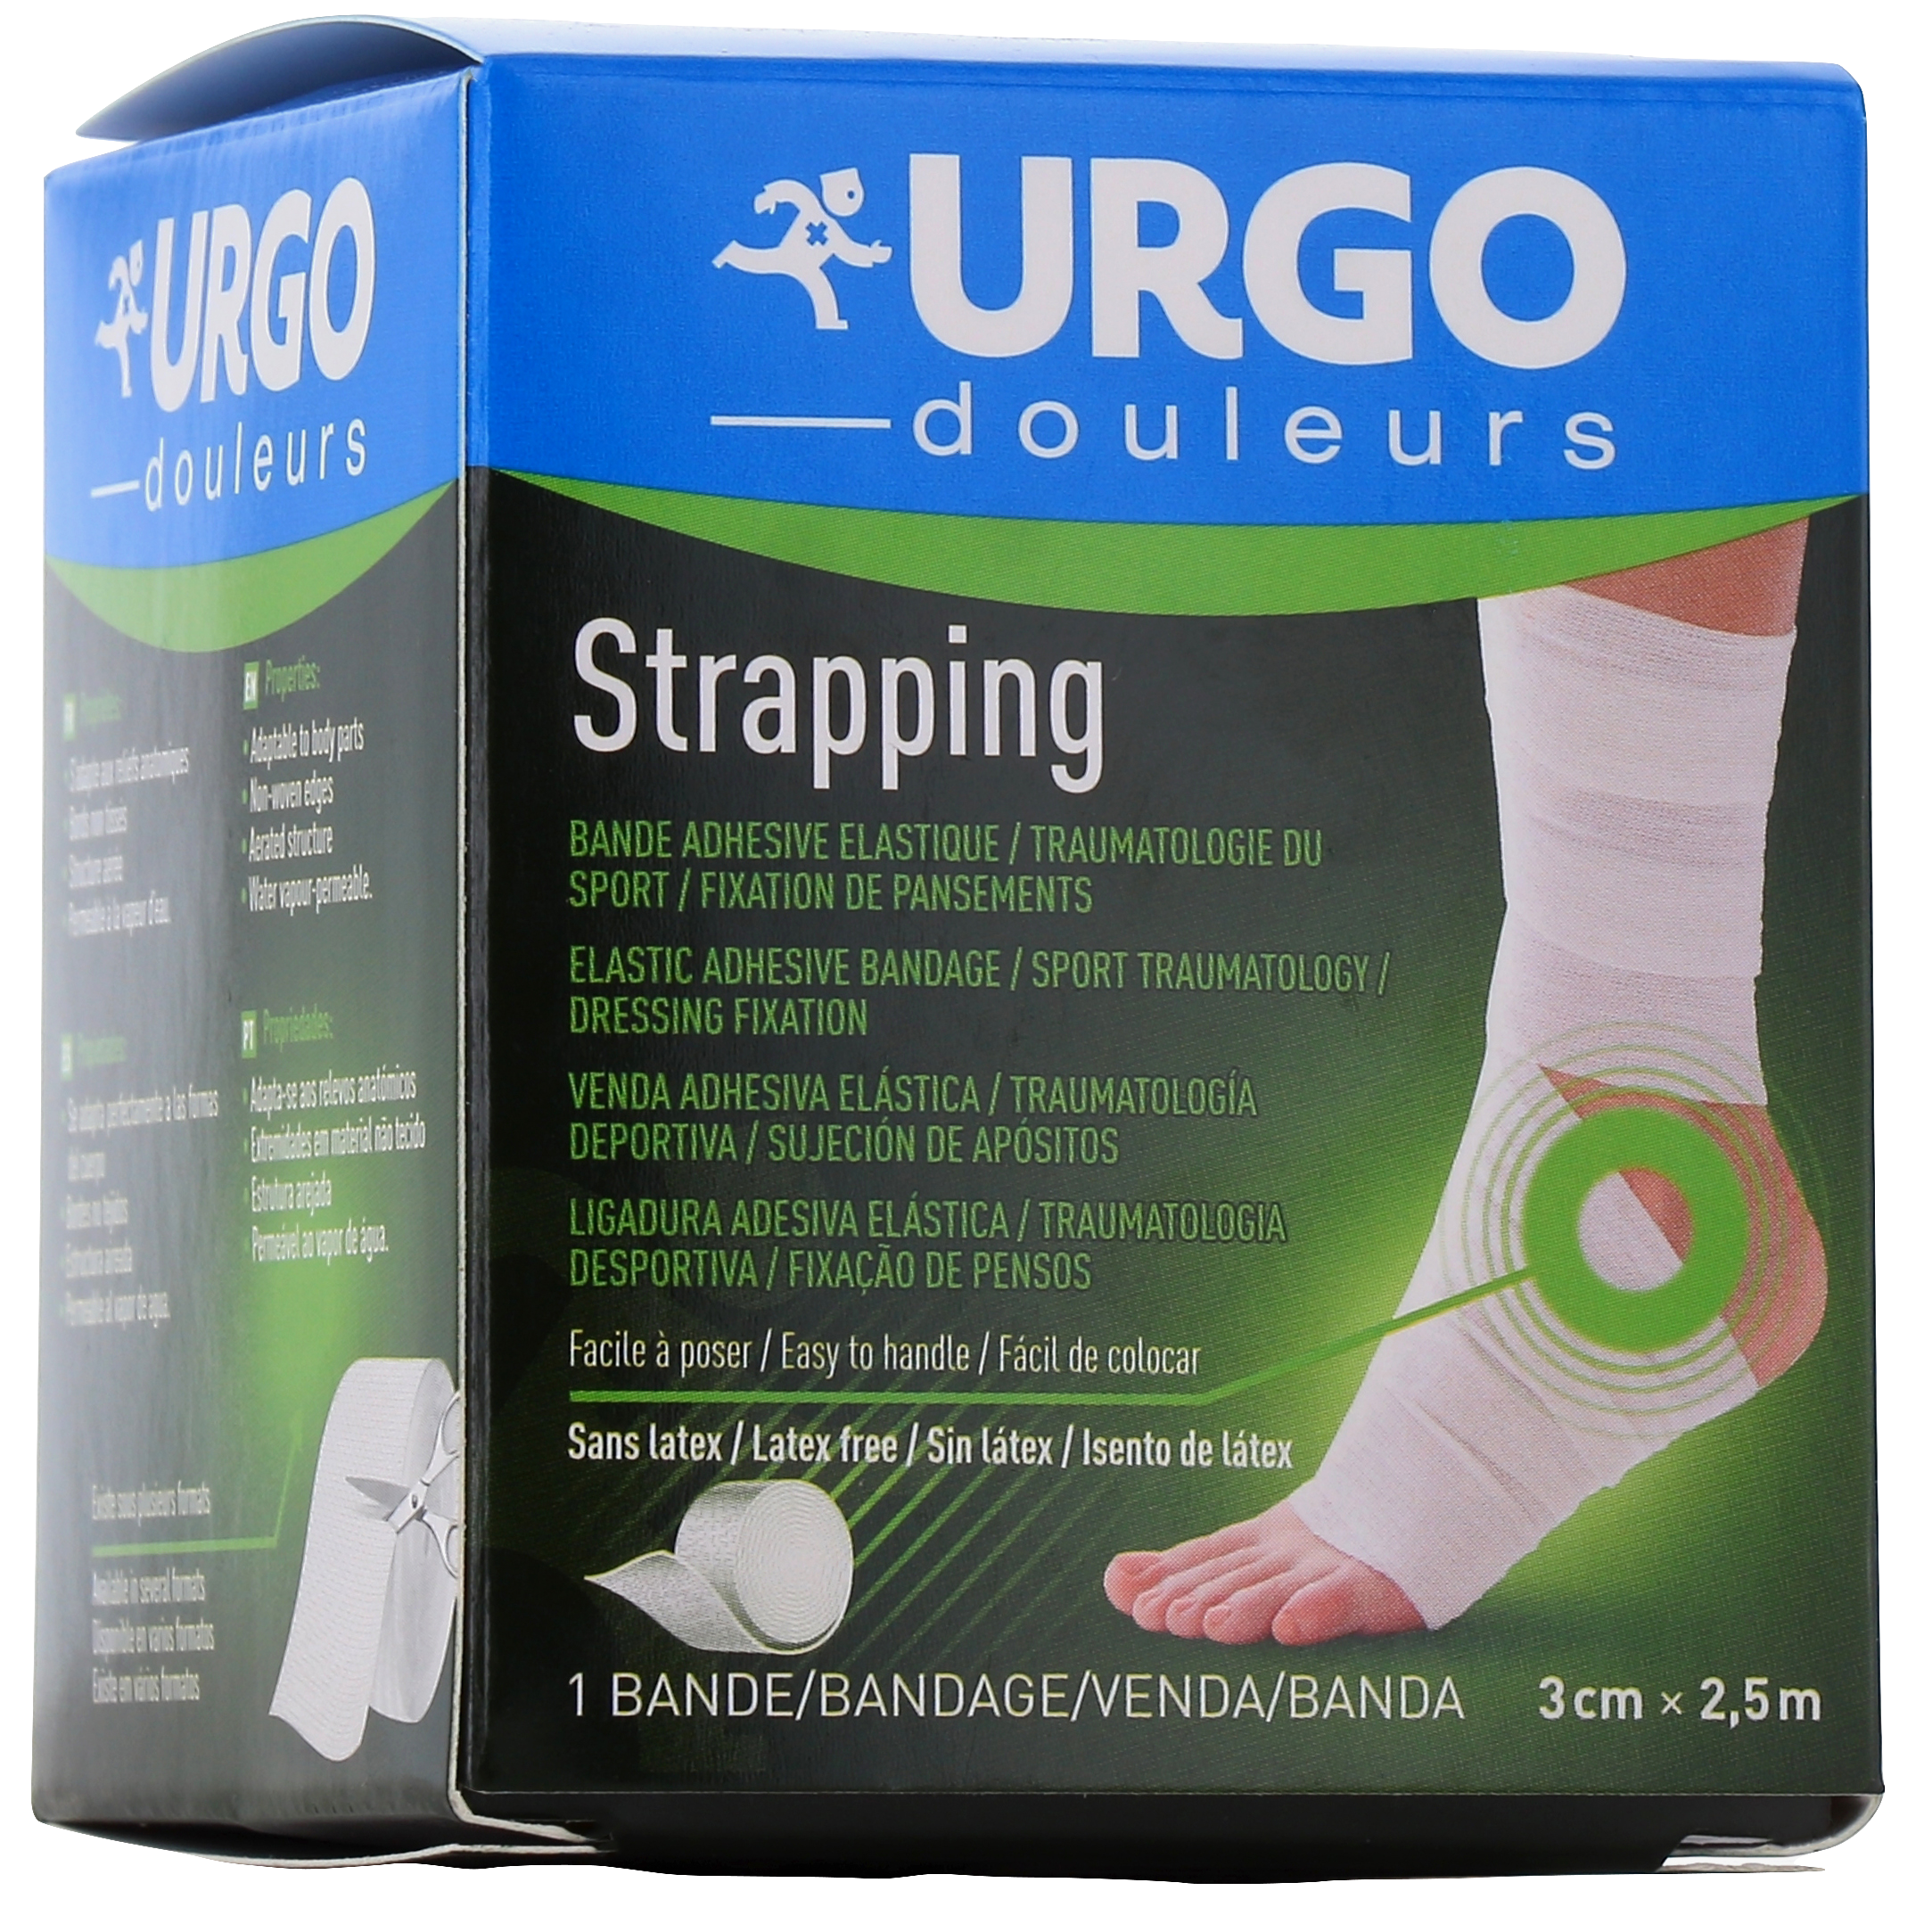 Bande de strapping Urgo